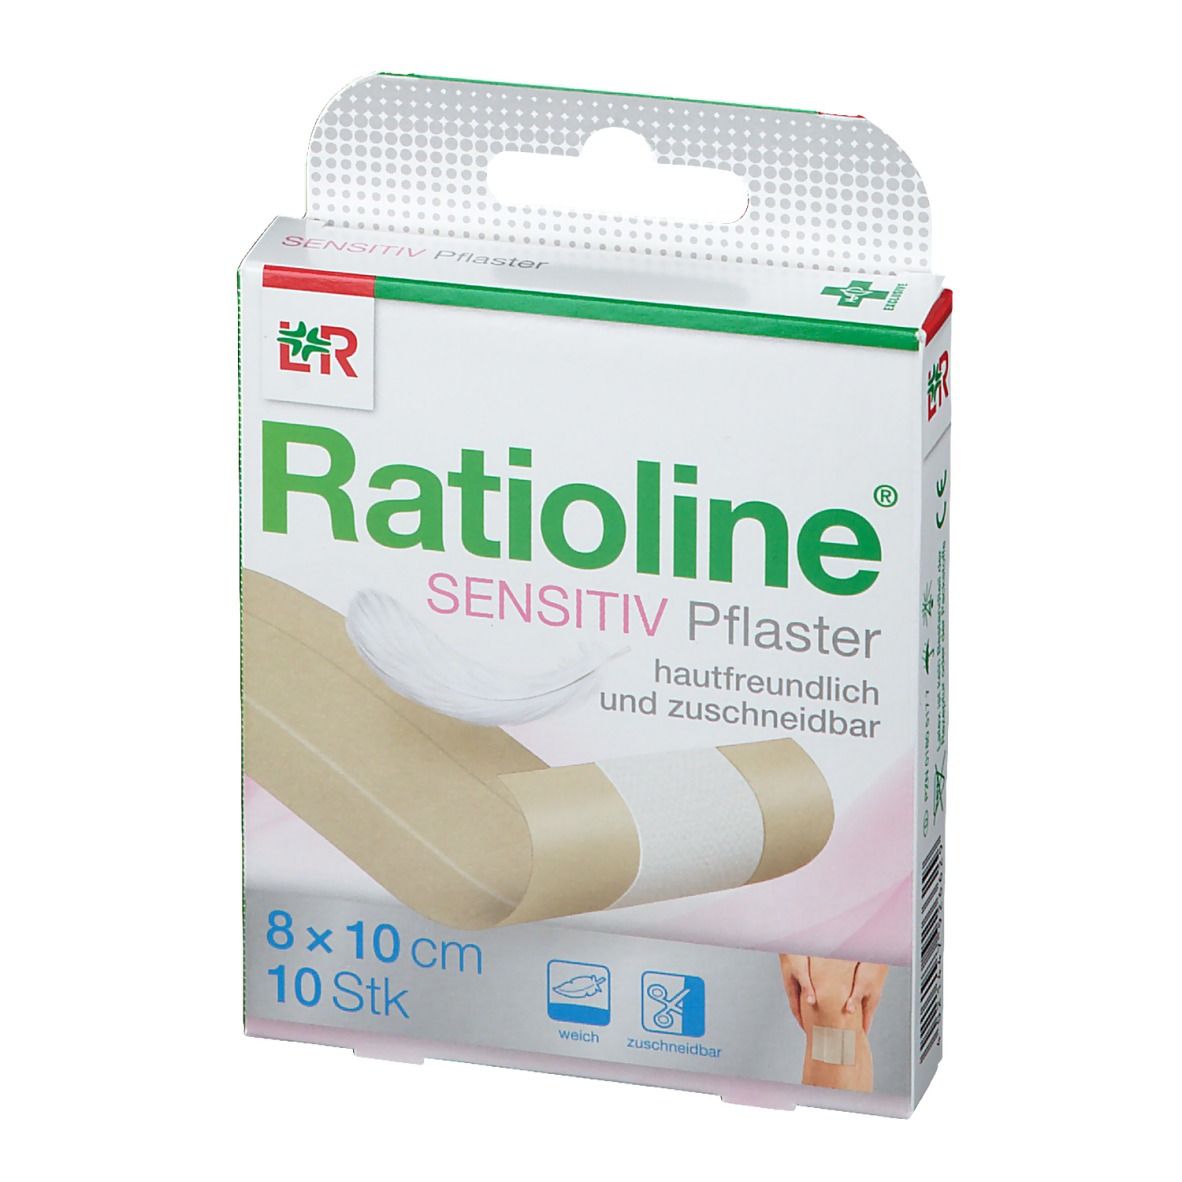 Ratioline® Sensitive Wundschnellverband 8 cm x 10 cm